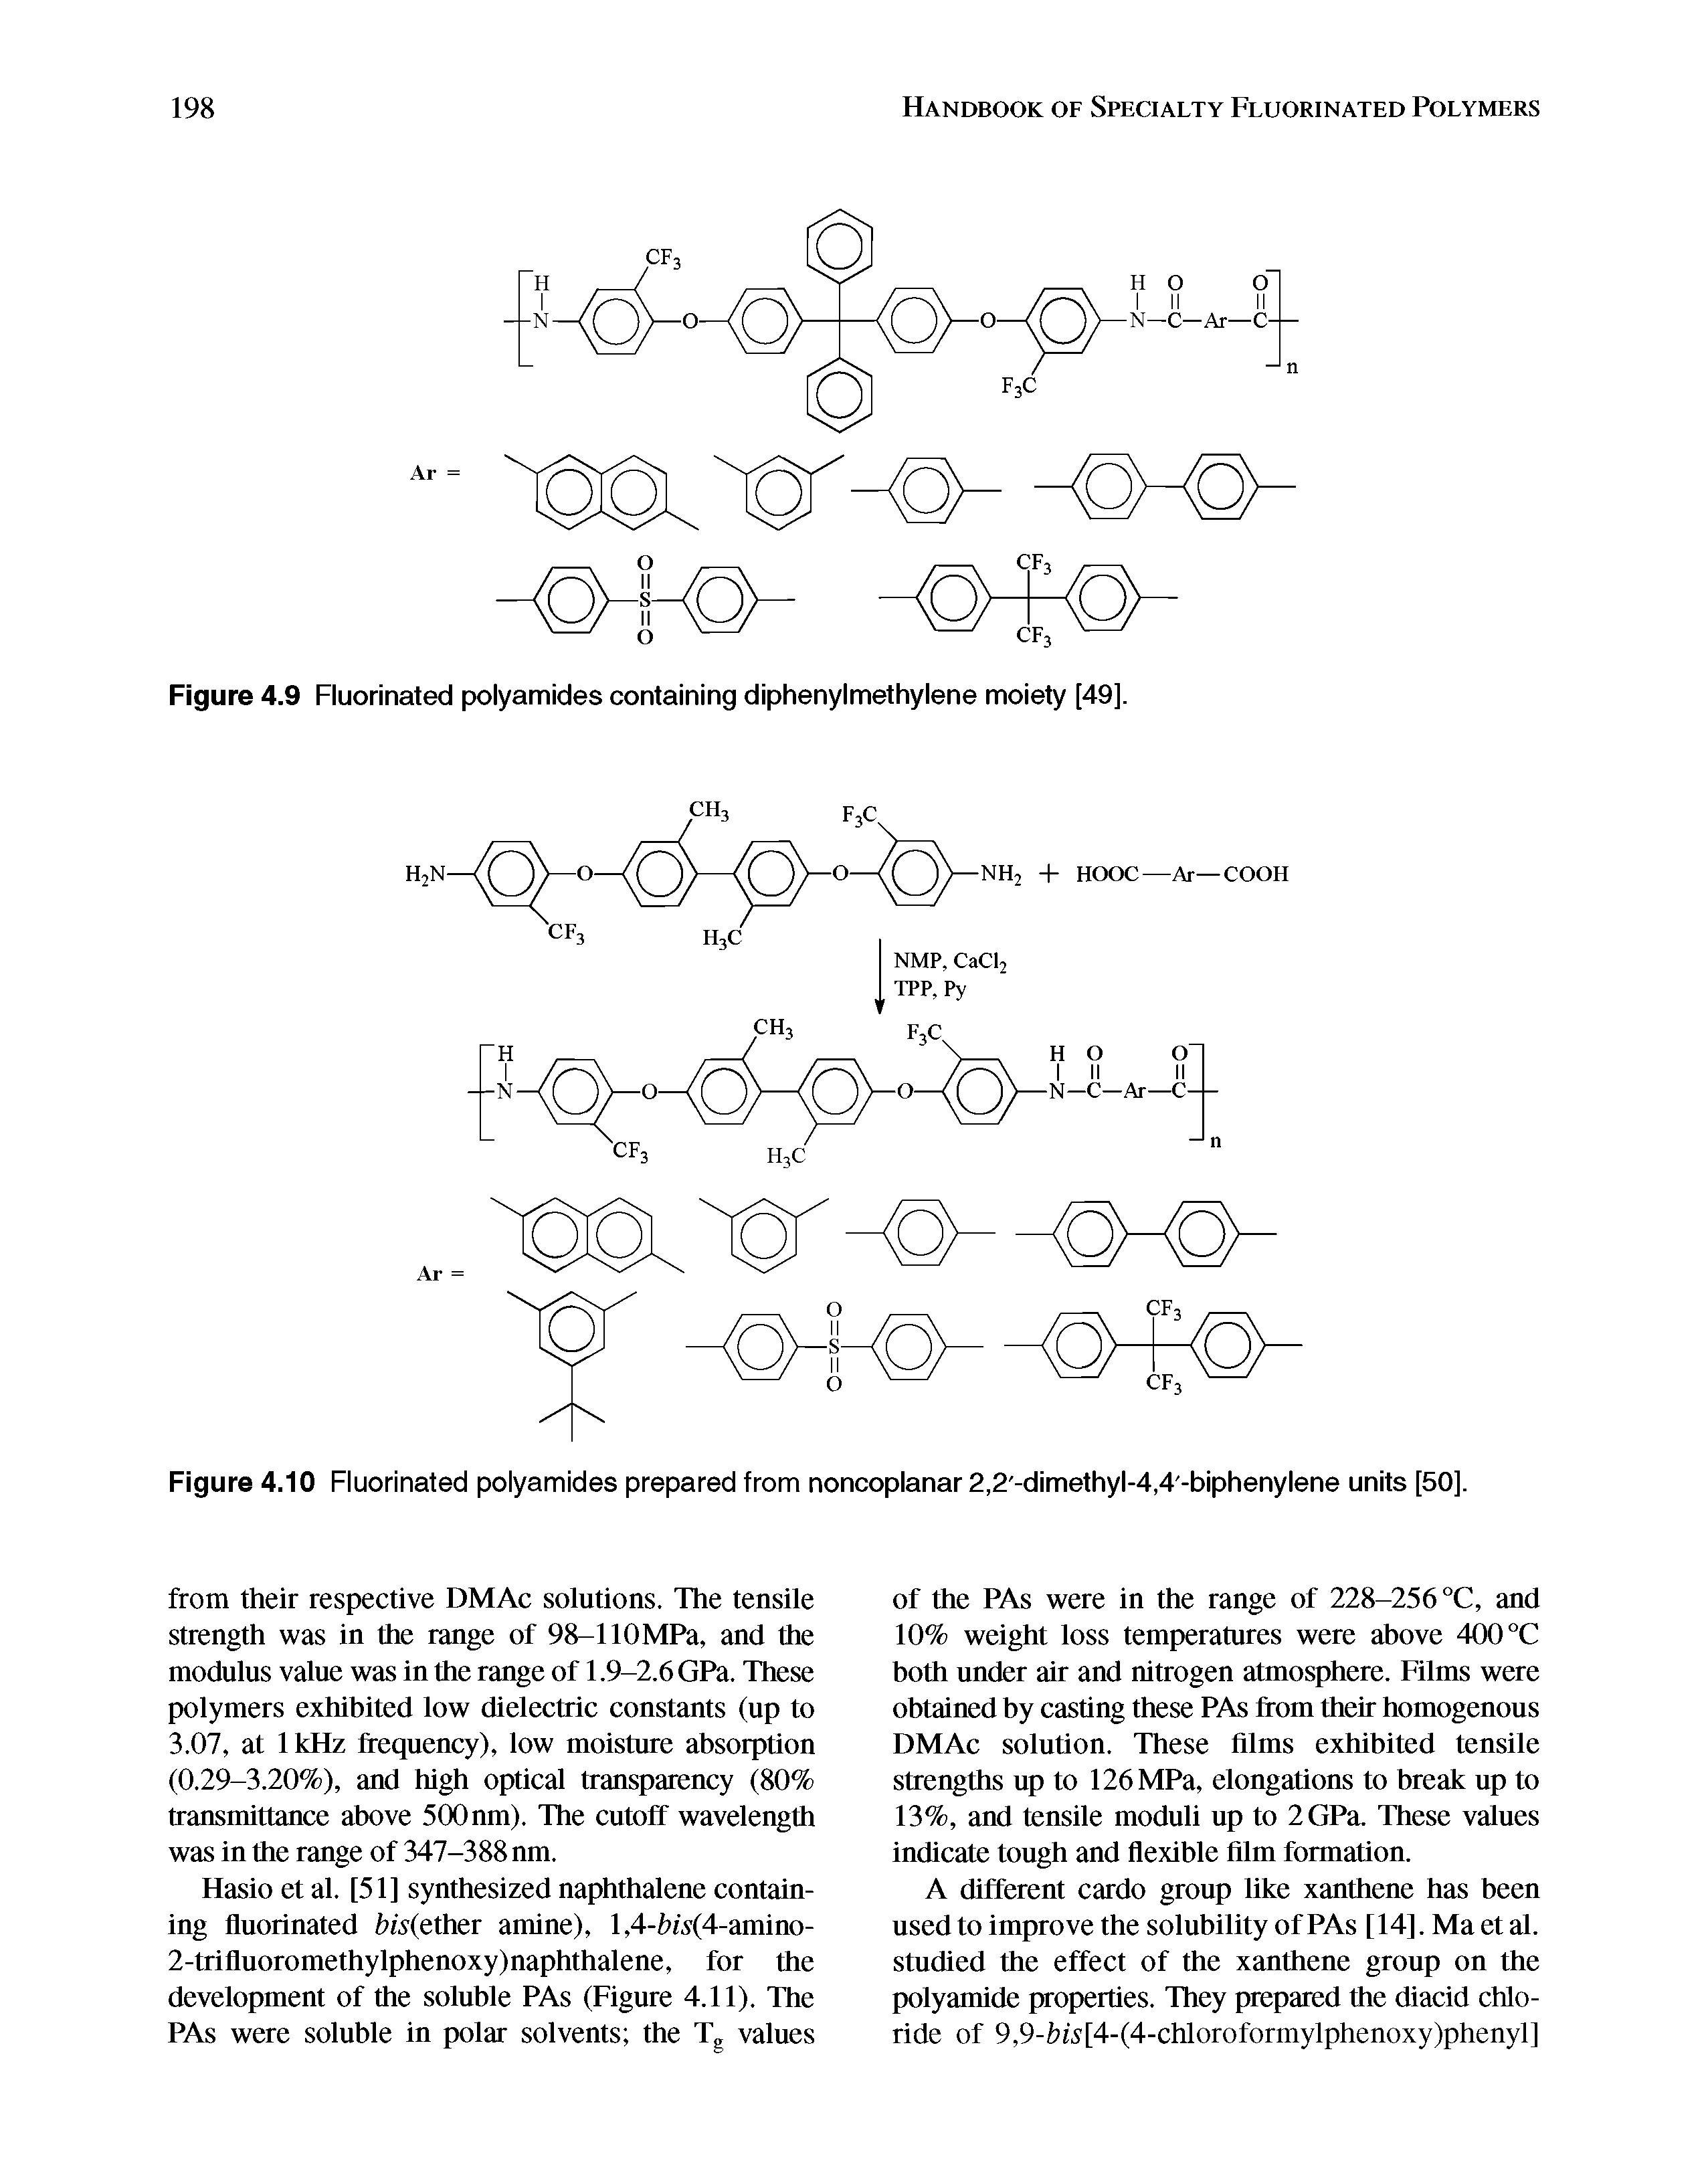 Figure 4.9 Fluorinated polyamides containing diphenylmethylene moiety [49].